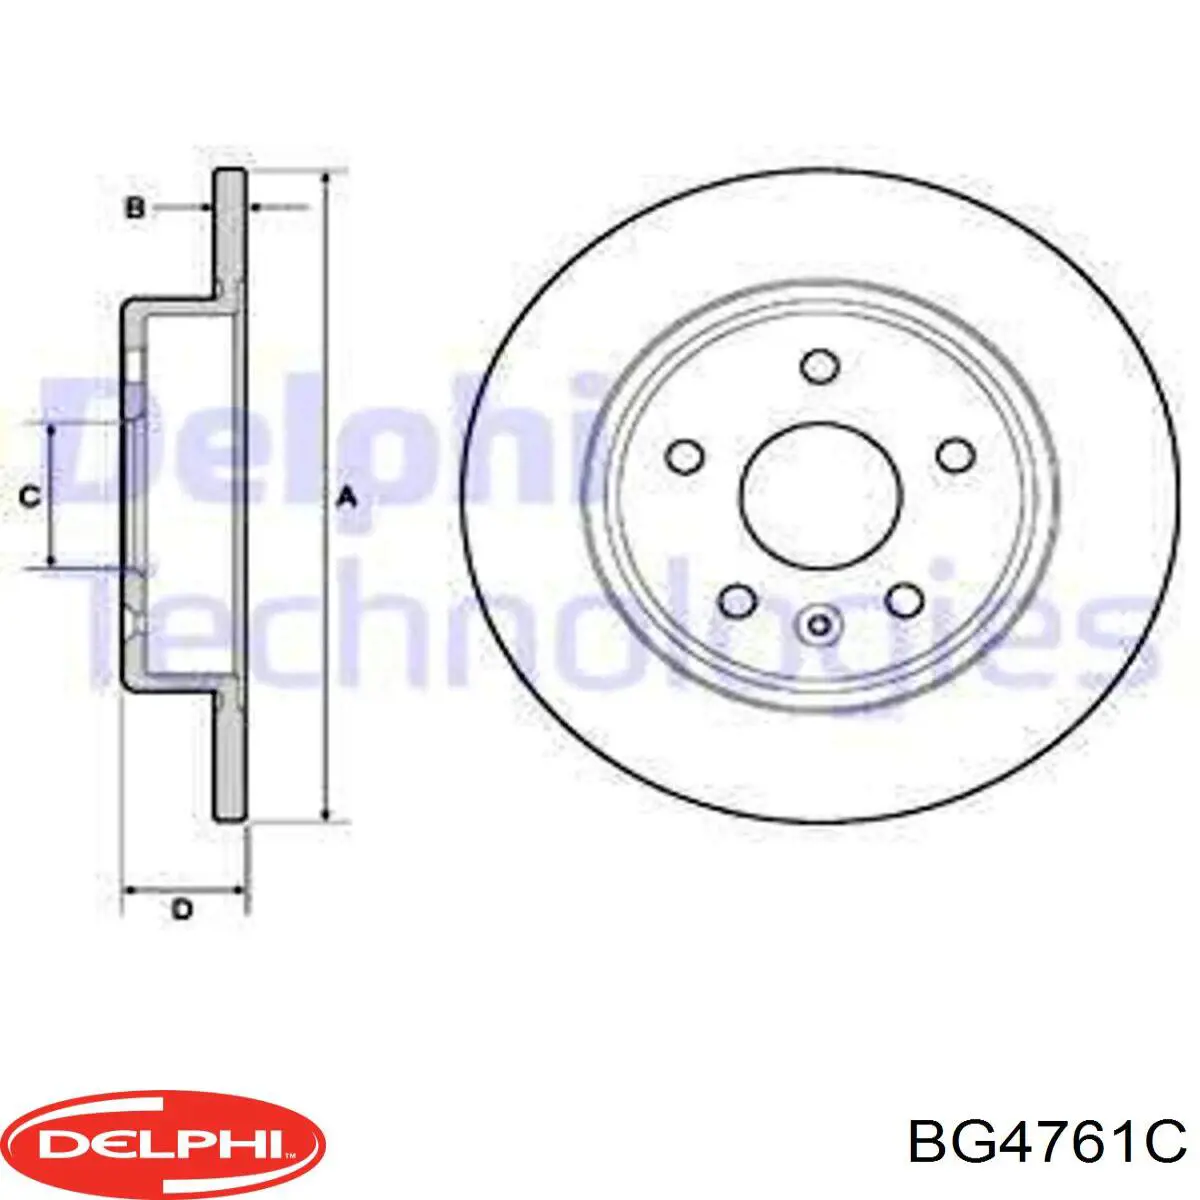 BG4761C Delphi disco do freio traseiro